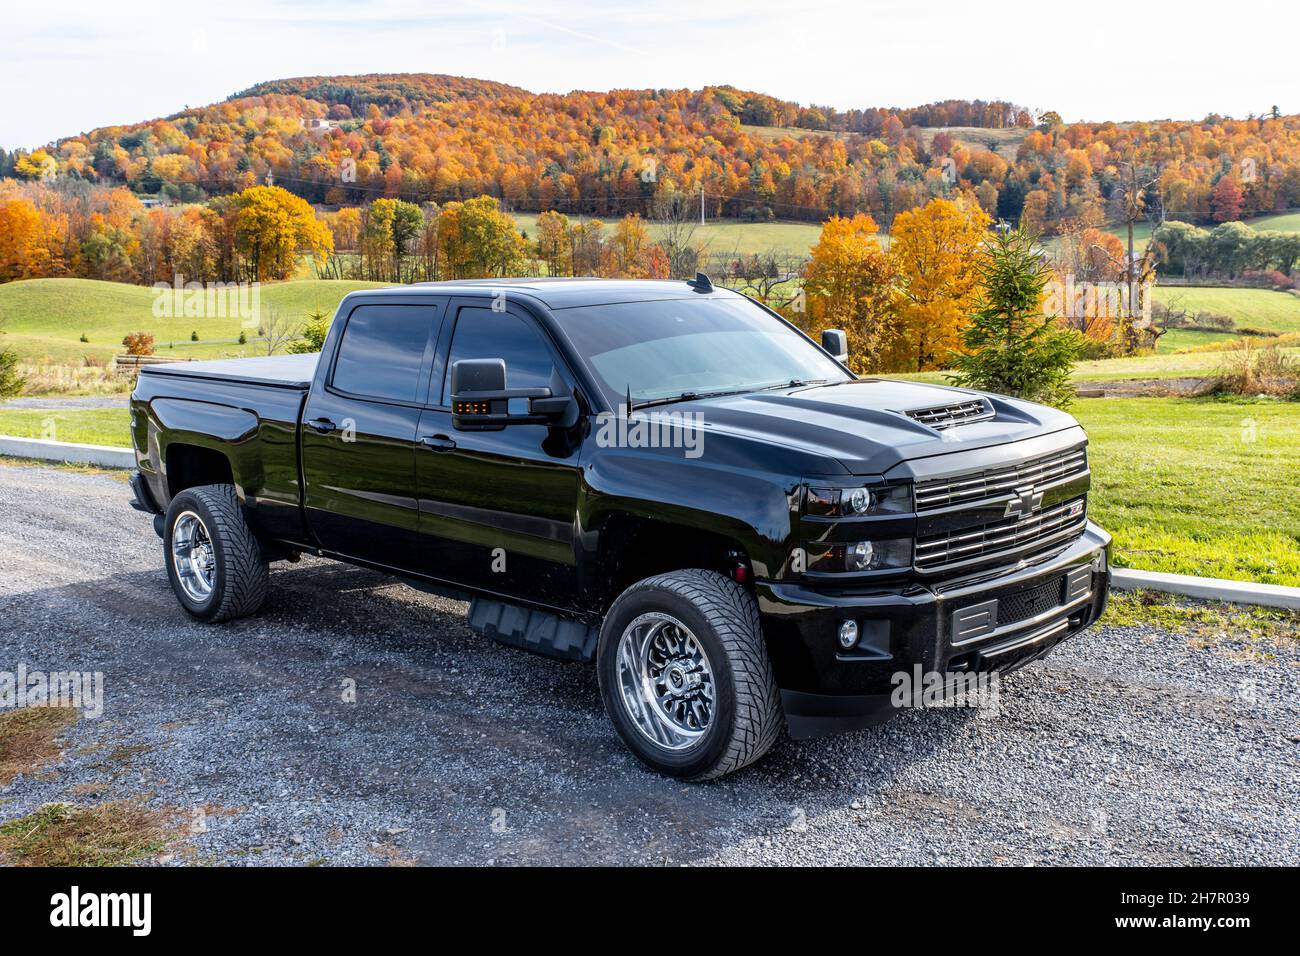 COBLESKILL, UNITED STATES - Oct 13, 2020: A black Chevrolet Silverado pickup truck Stock Photo